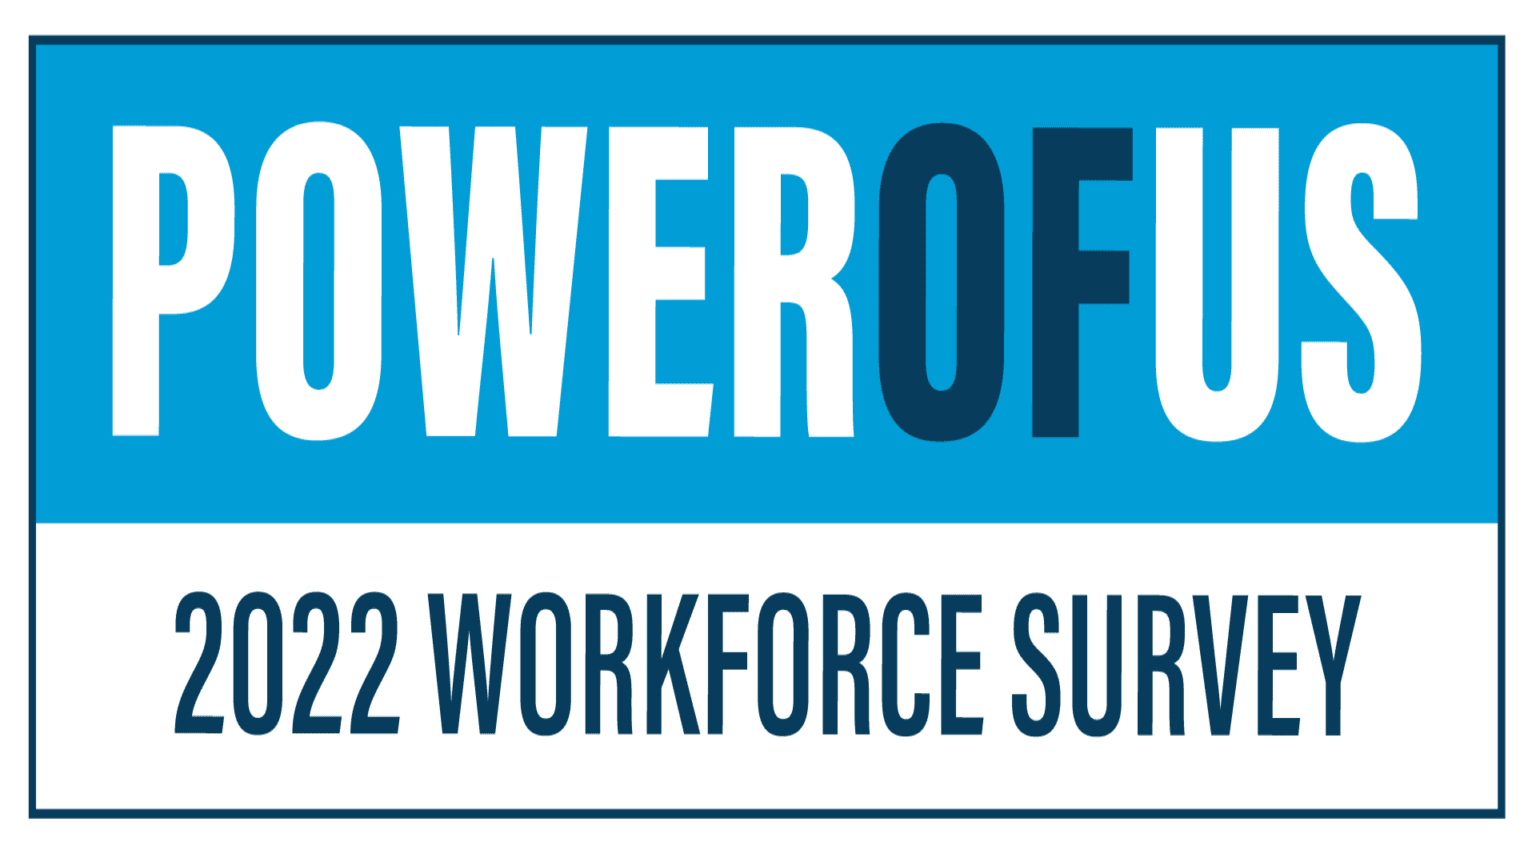 Power of Us Workforce Survey